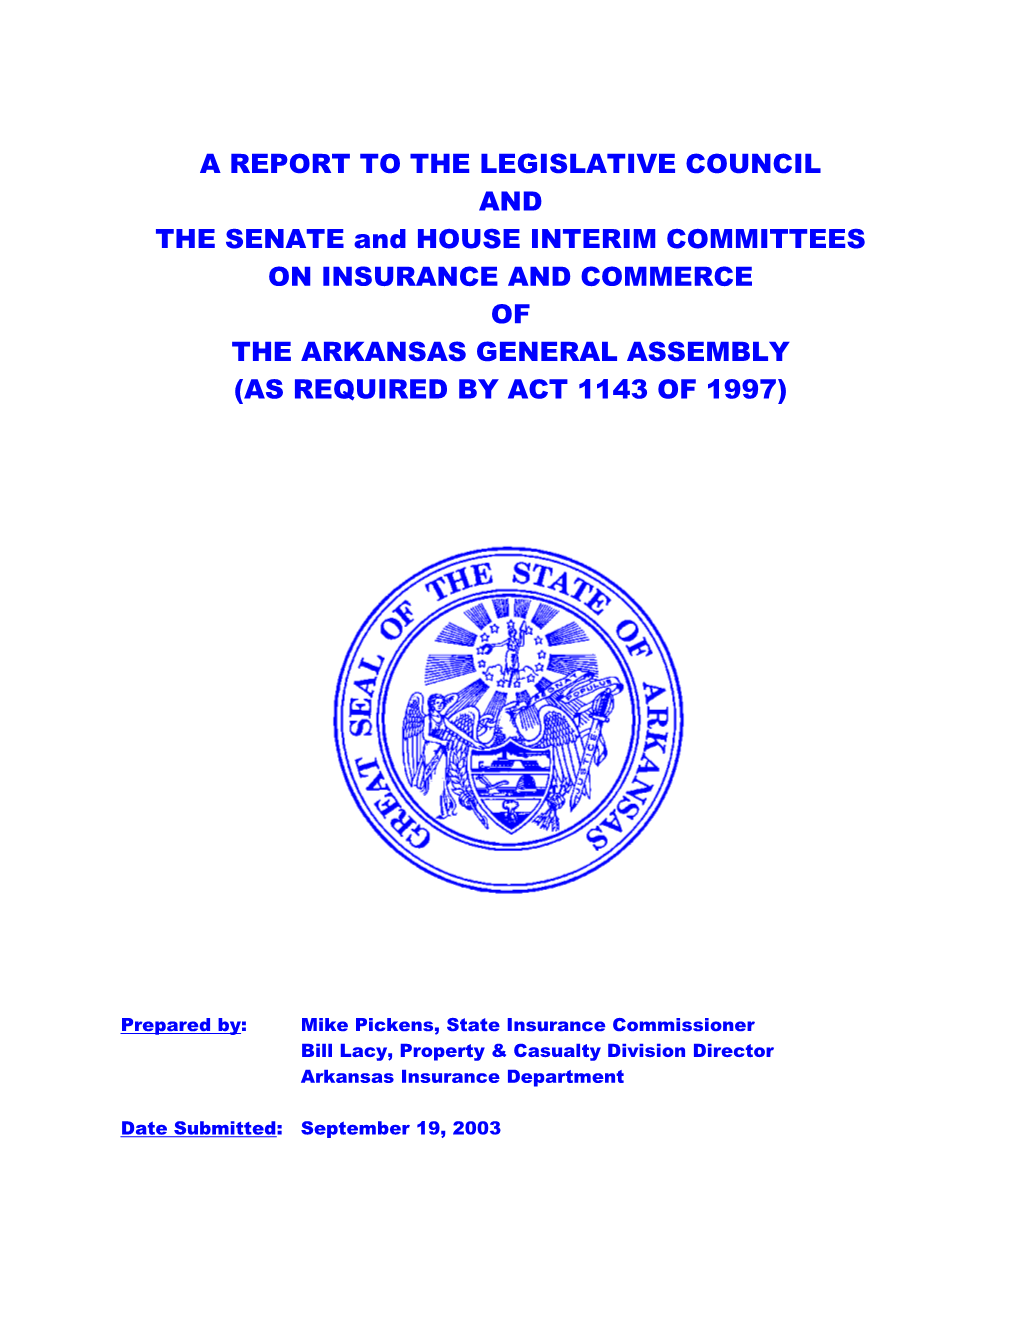 A Report to the Legislative Council